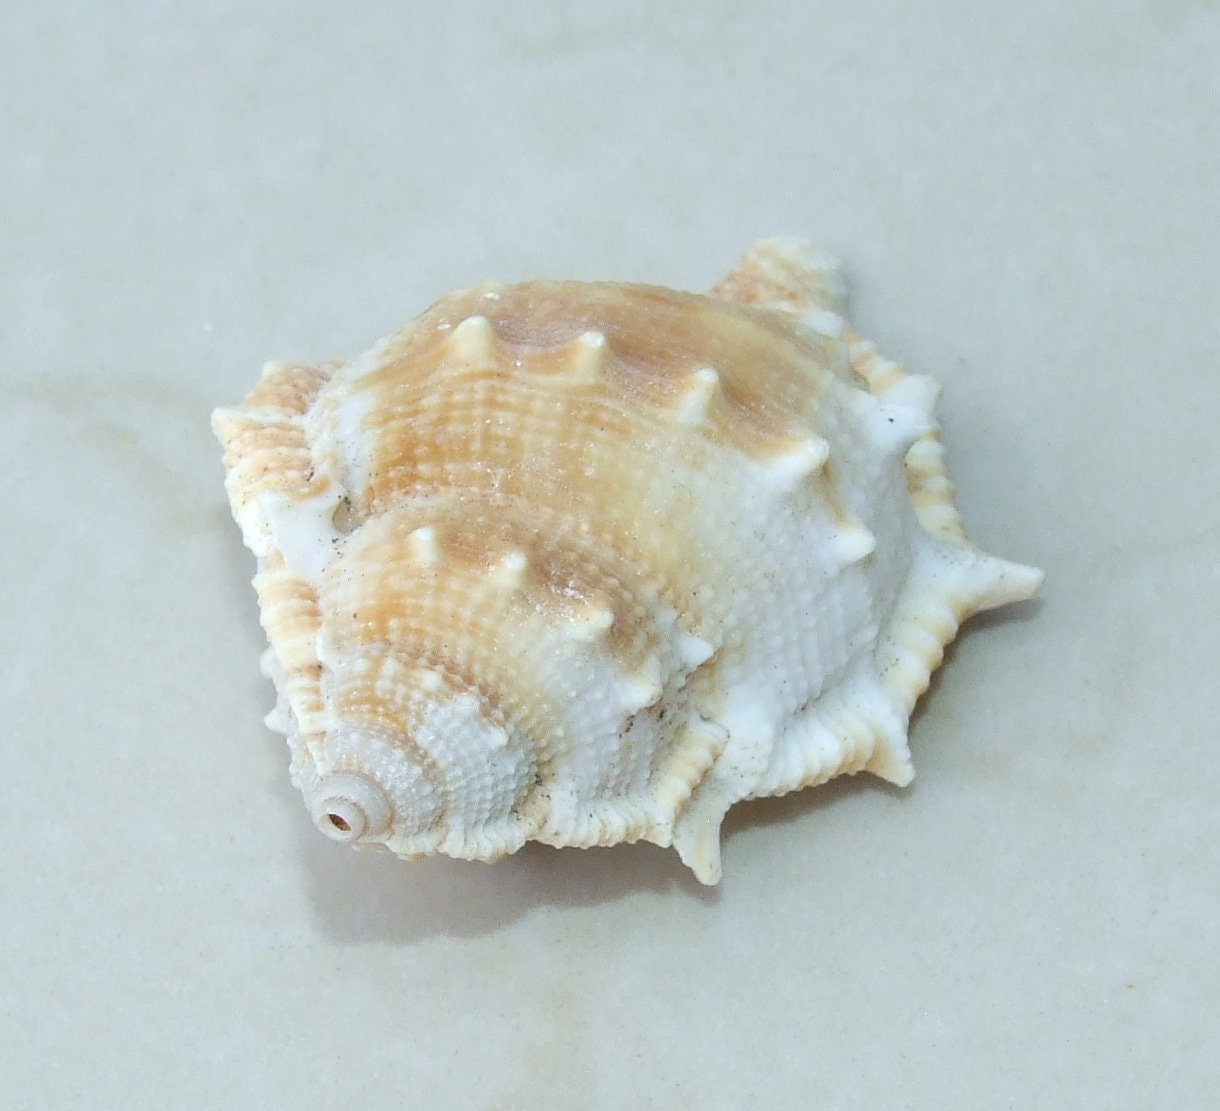 Large Natural Strombus Conch Sea Shell, Spiral Shell, Seashell, Shell, Beach Decor, Ocean Shell - 55-60mm, 4 Shells - 126-03